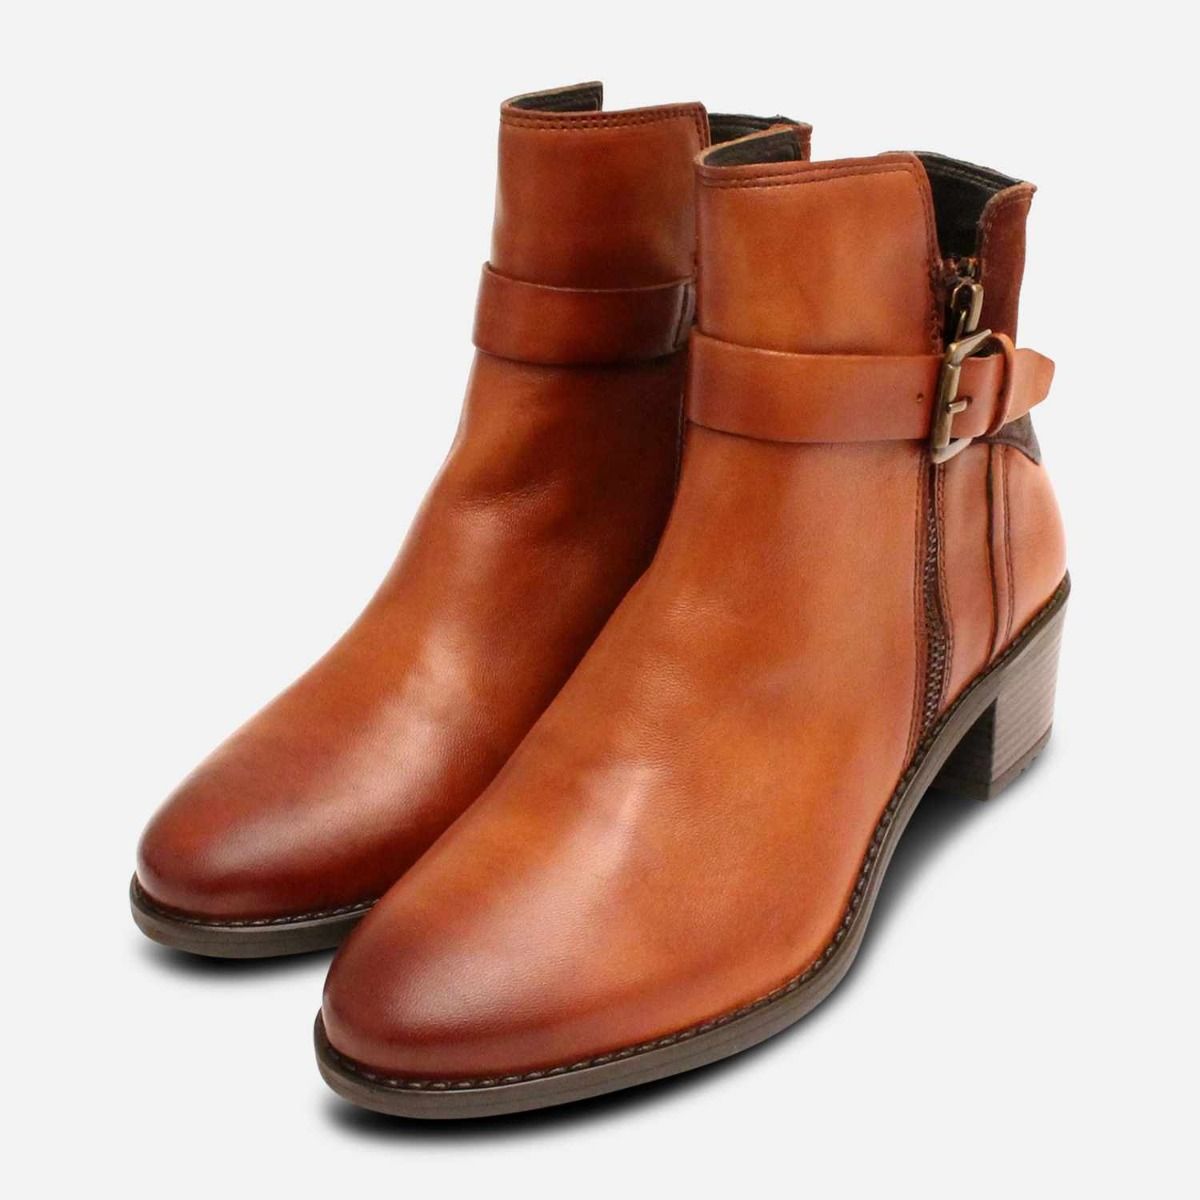 https://arthurknight.com/pub/media/catalog/product/cache/8723b12f6326e9bdc6bc191d0c49a6b8/b/u/bugatti-light-brown-ankle-zip-boots-with-heel-1.jpg